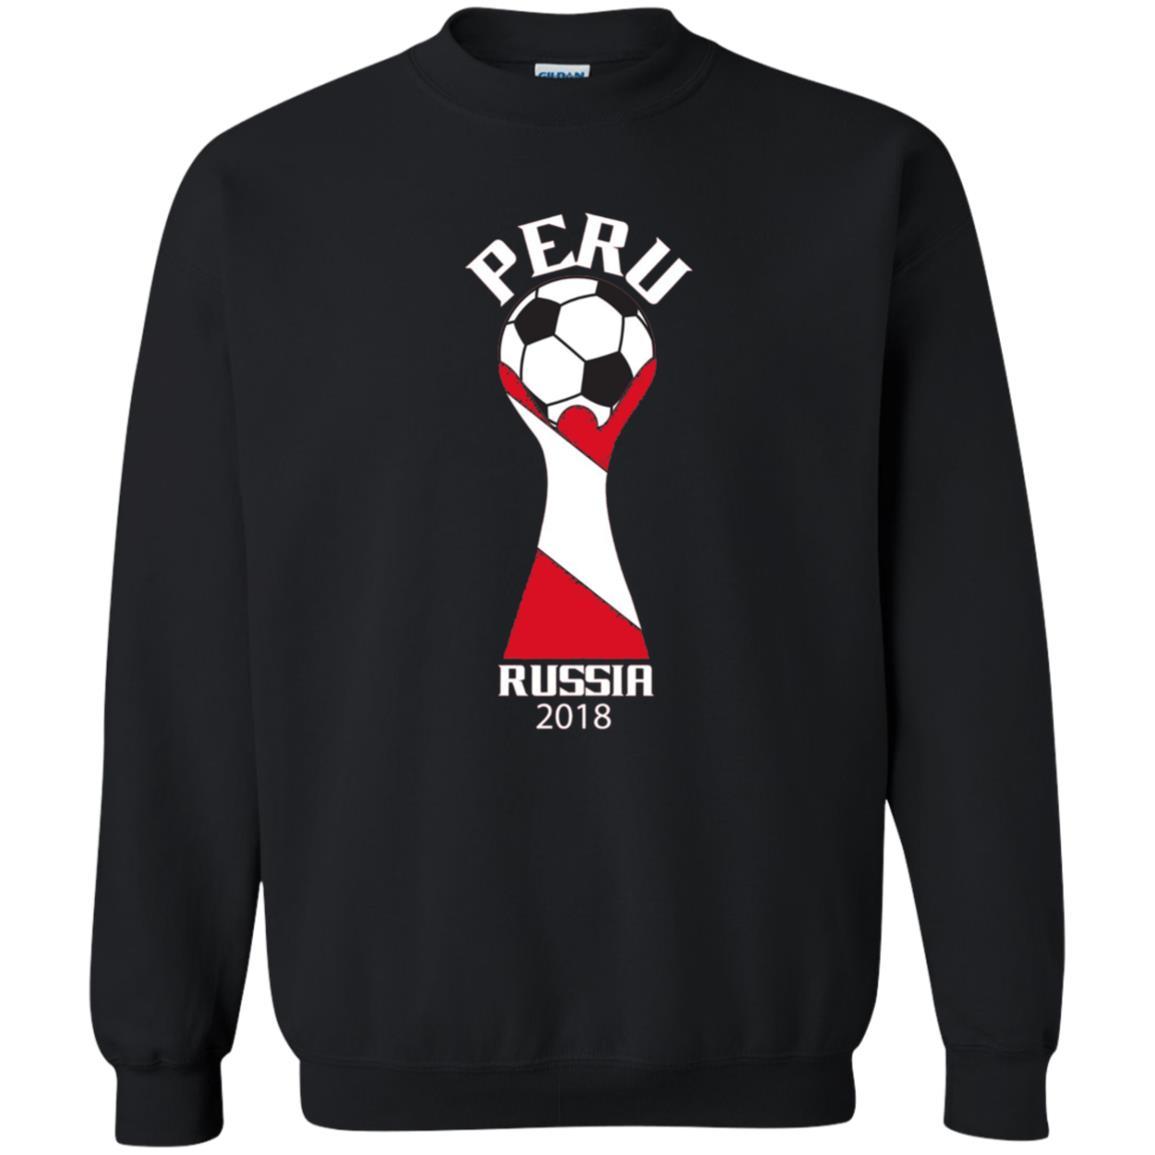 Football Lovers T-shirt Peru Russia 2018